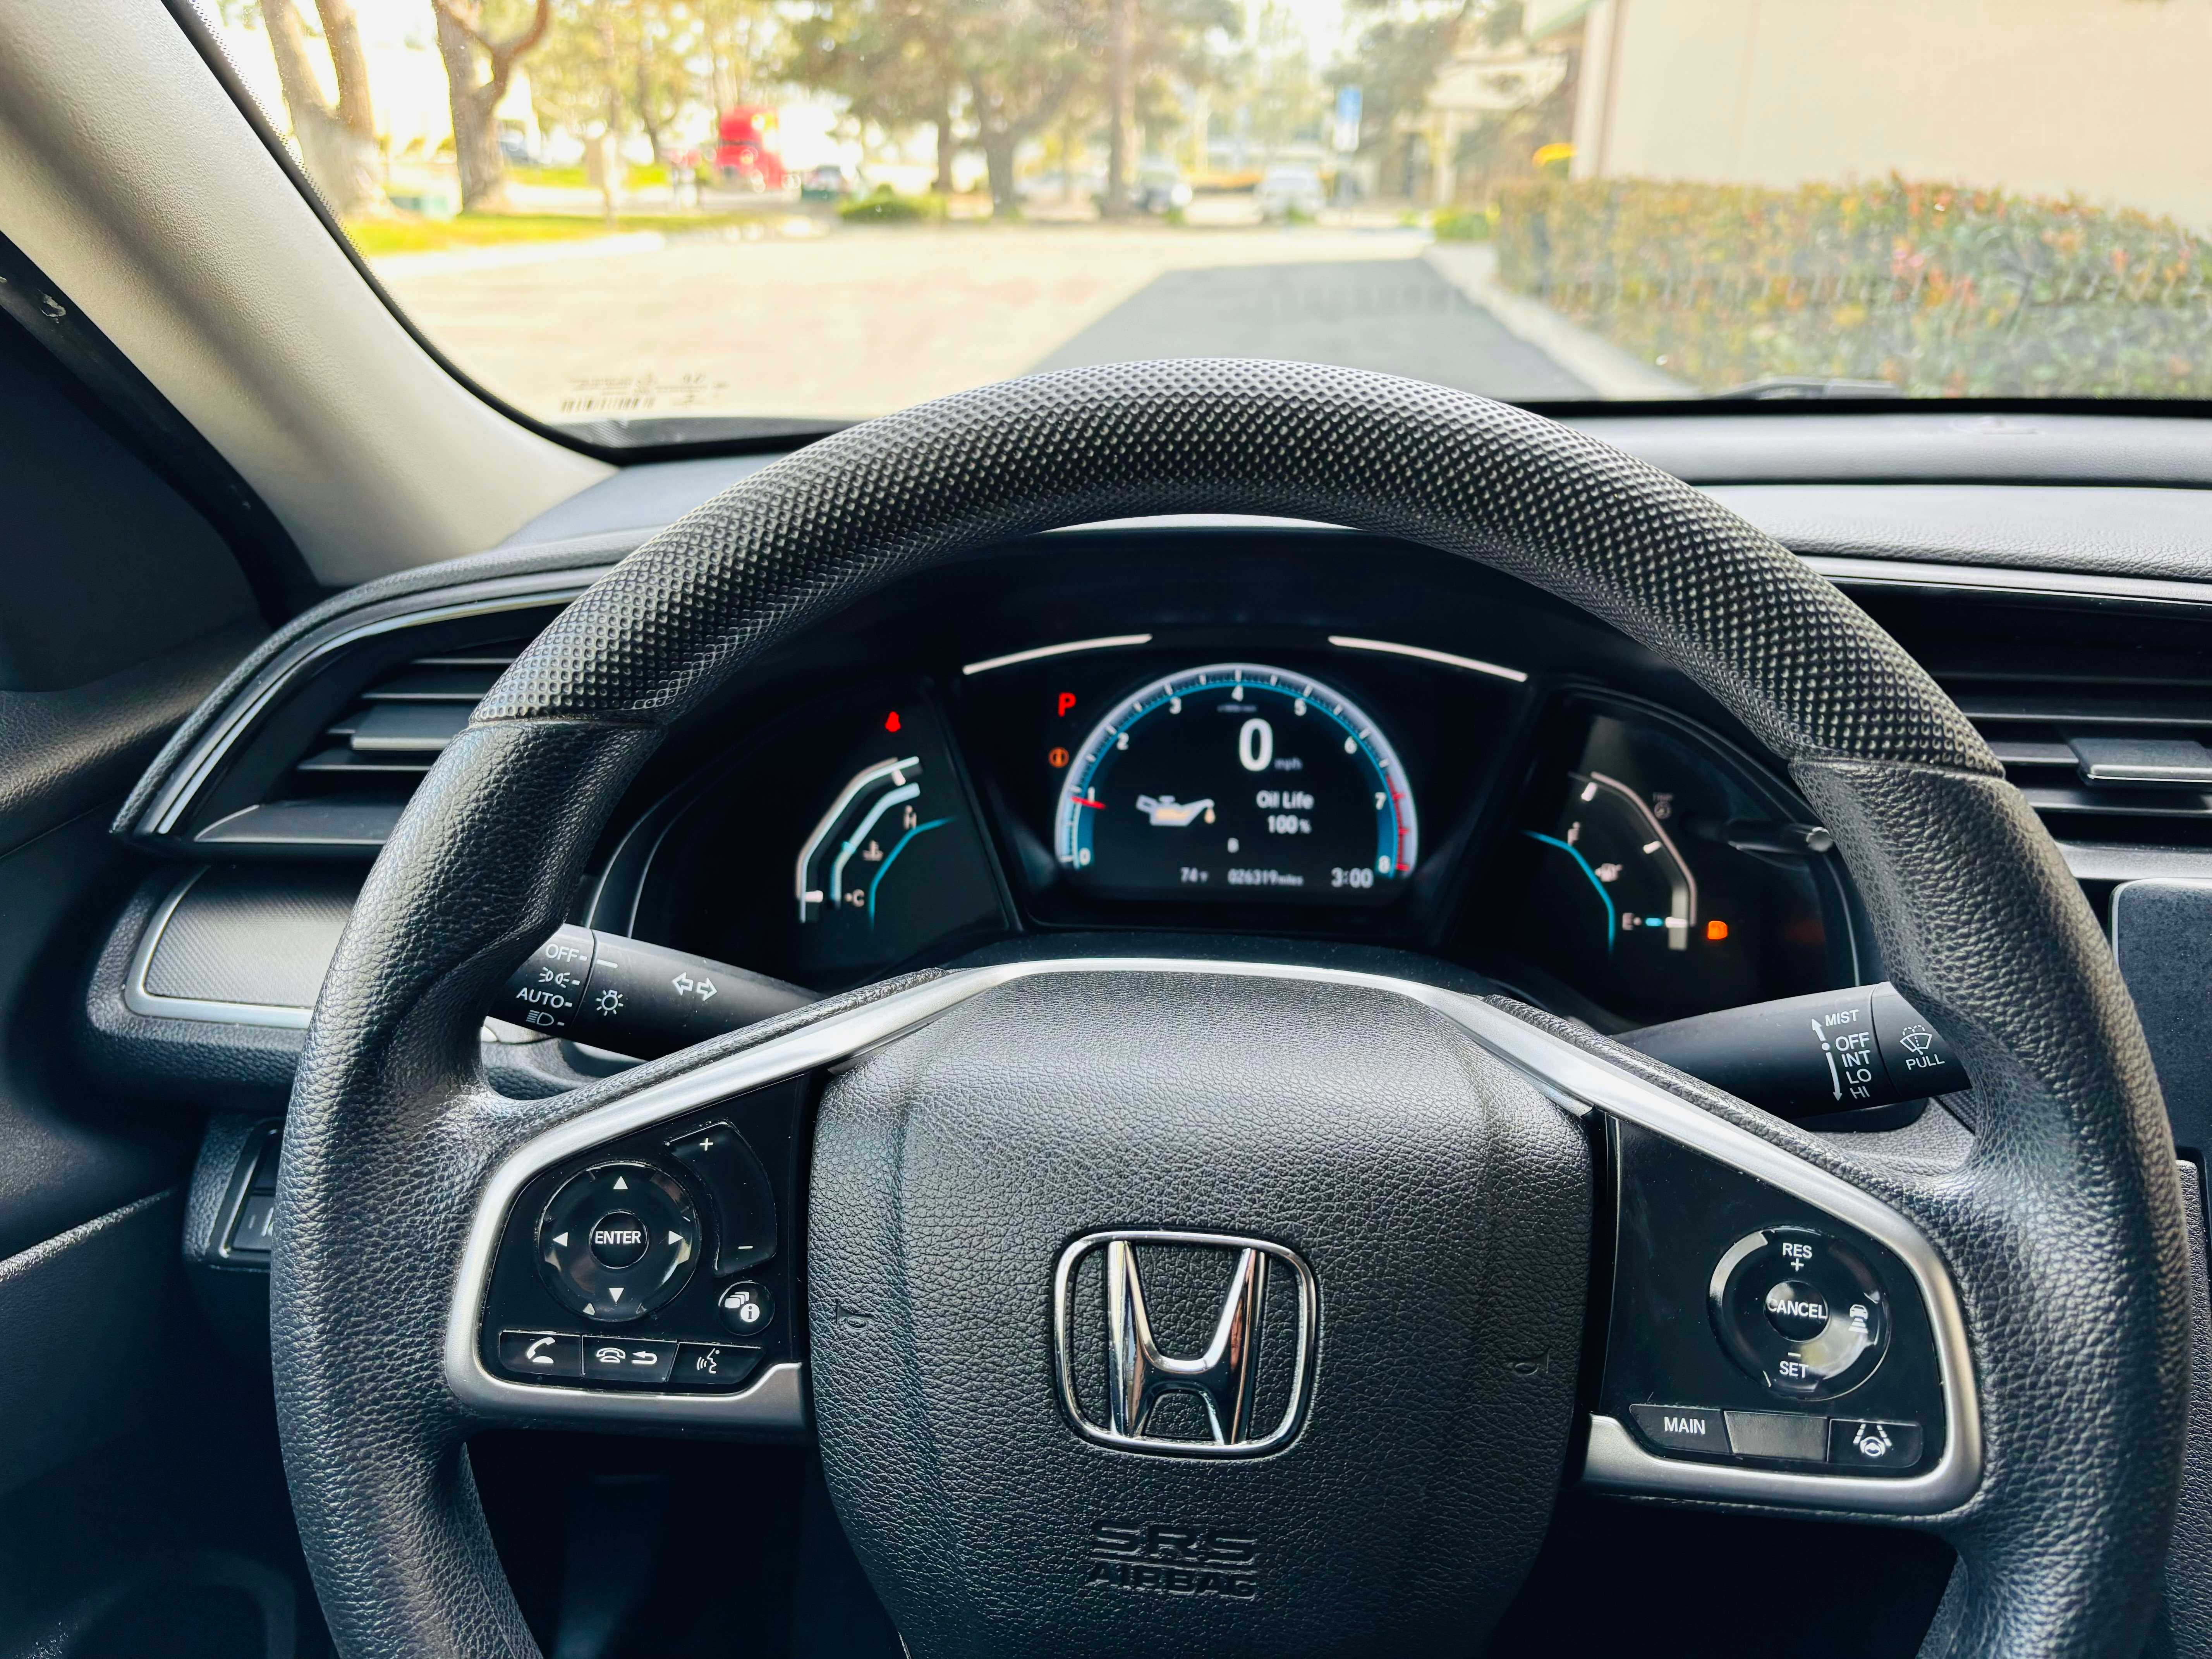 Honda Civic Image 12